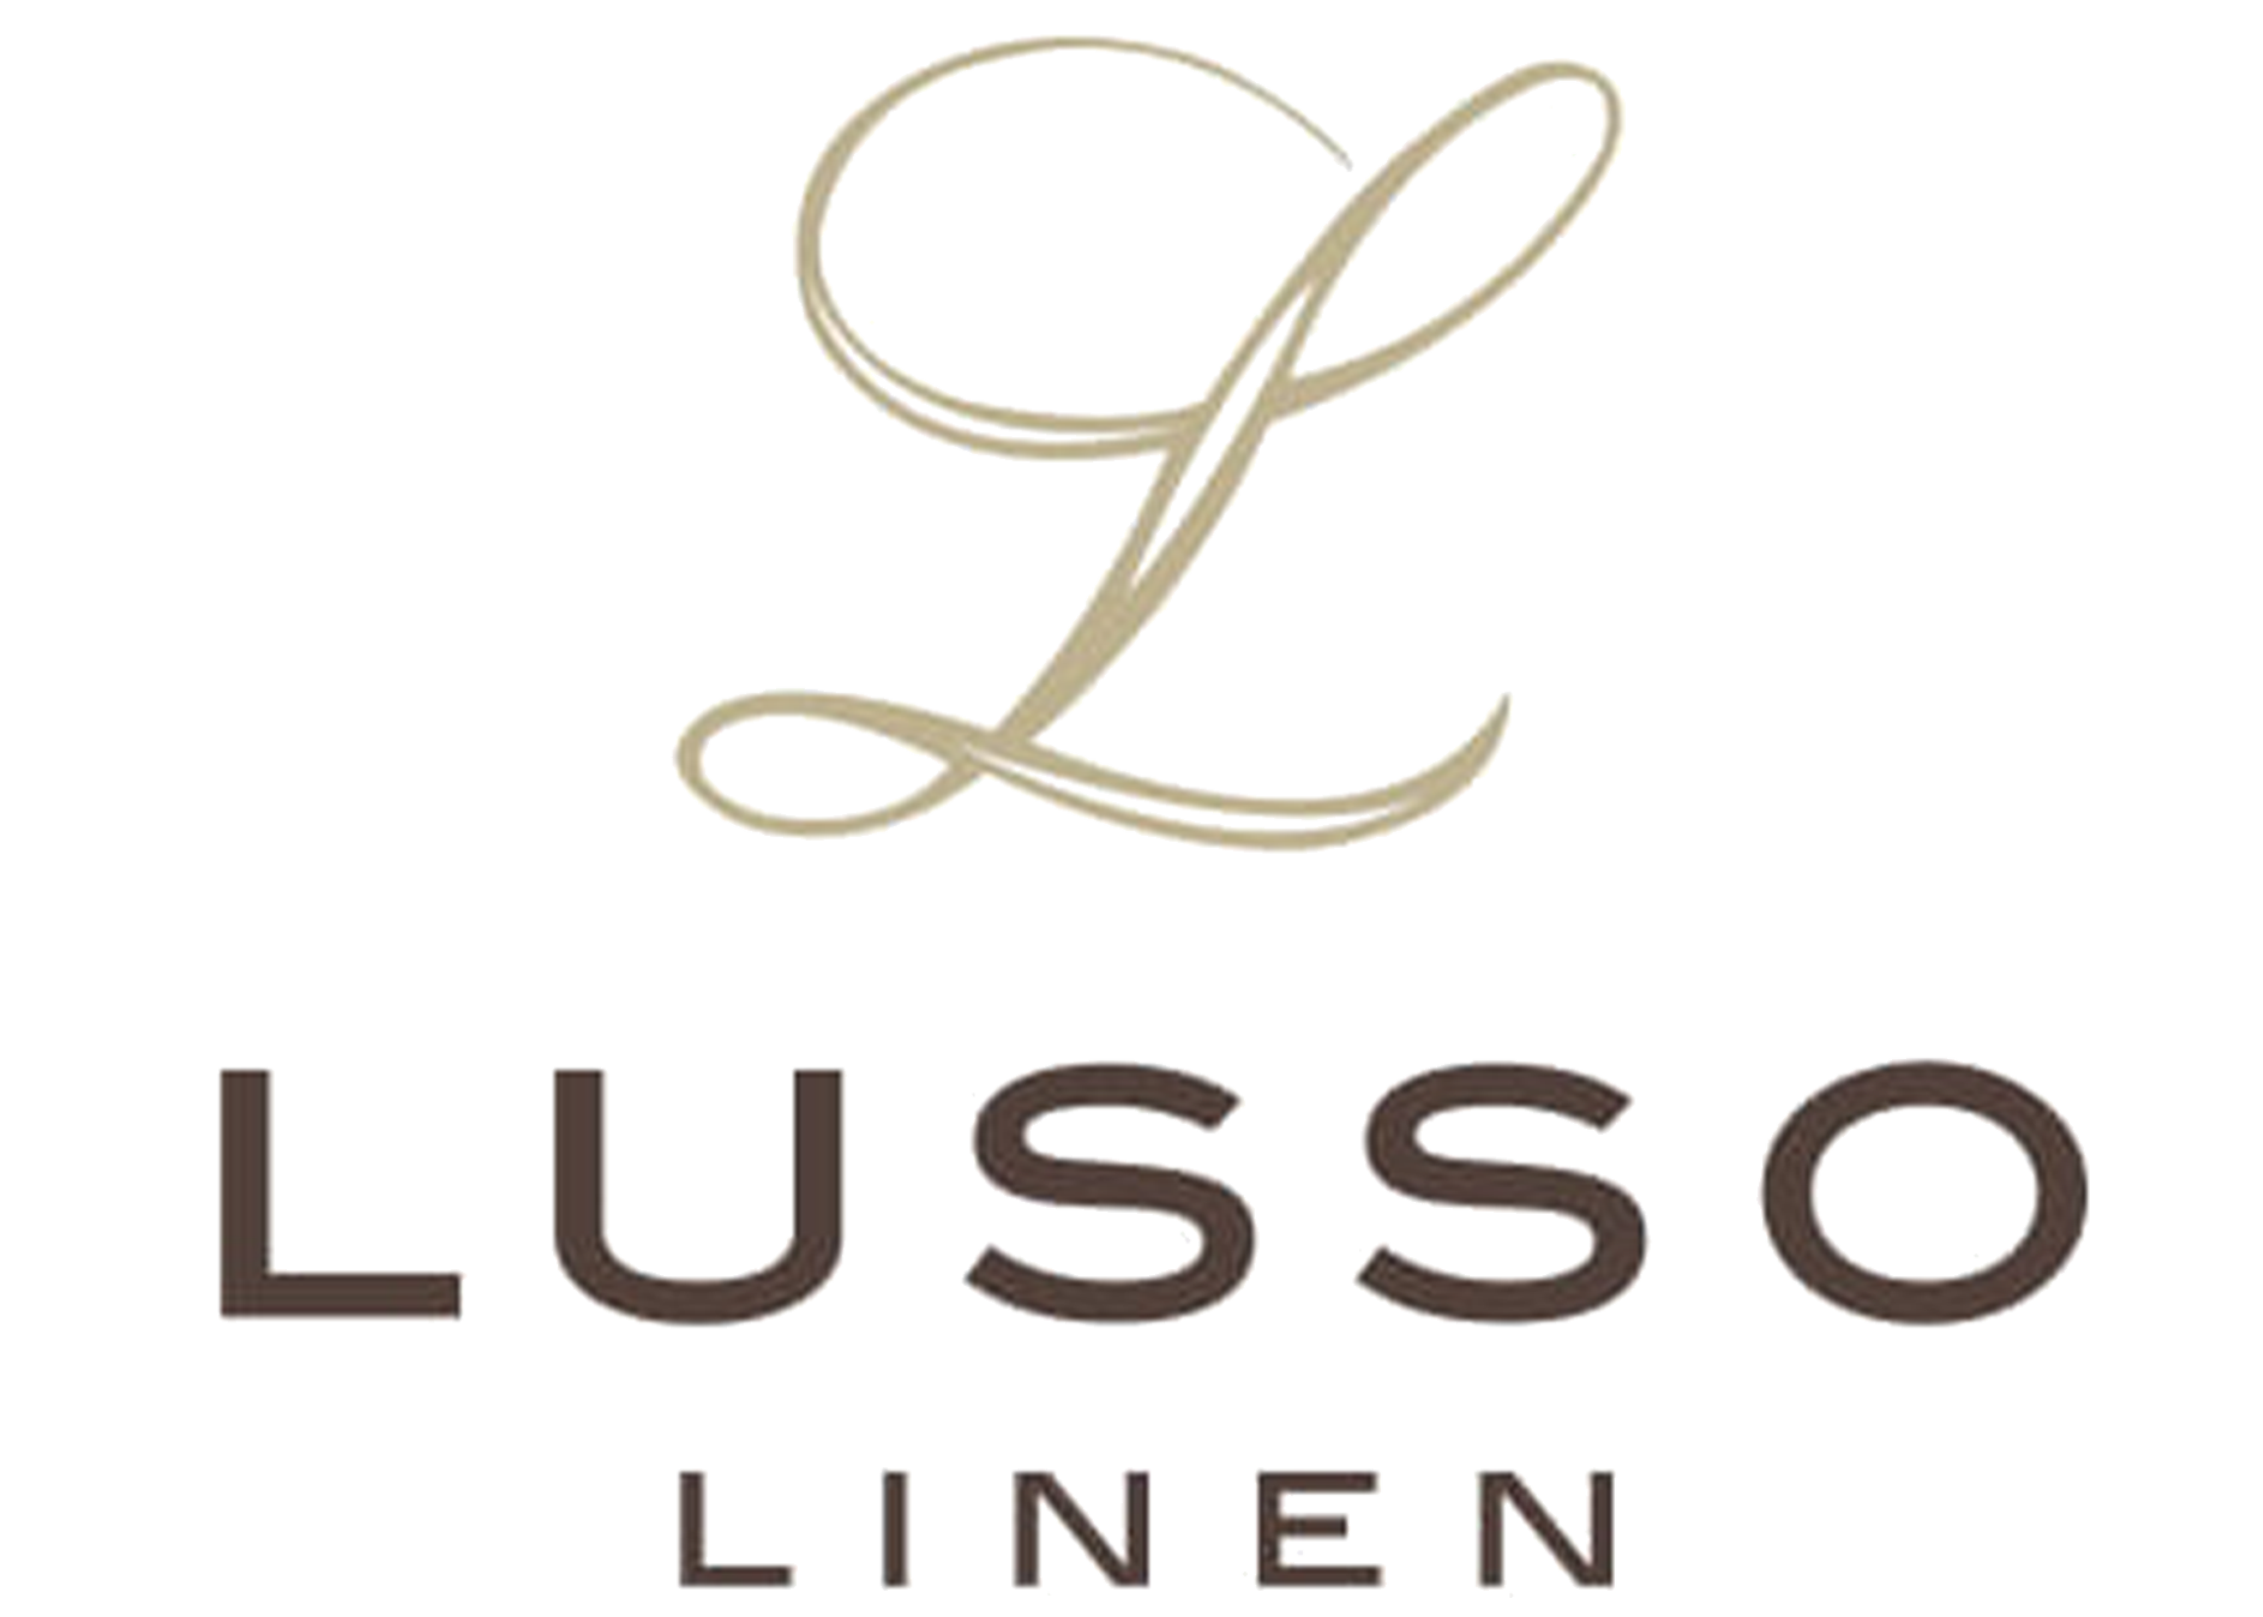 Try Linen - SATURN linen beige bra top 💬 #linen #linenbratop #bratop  #style #natural #sustainablefashion #trylinen